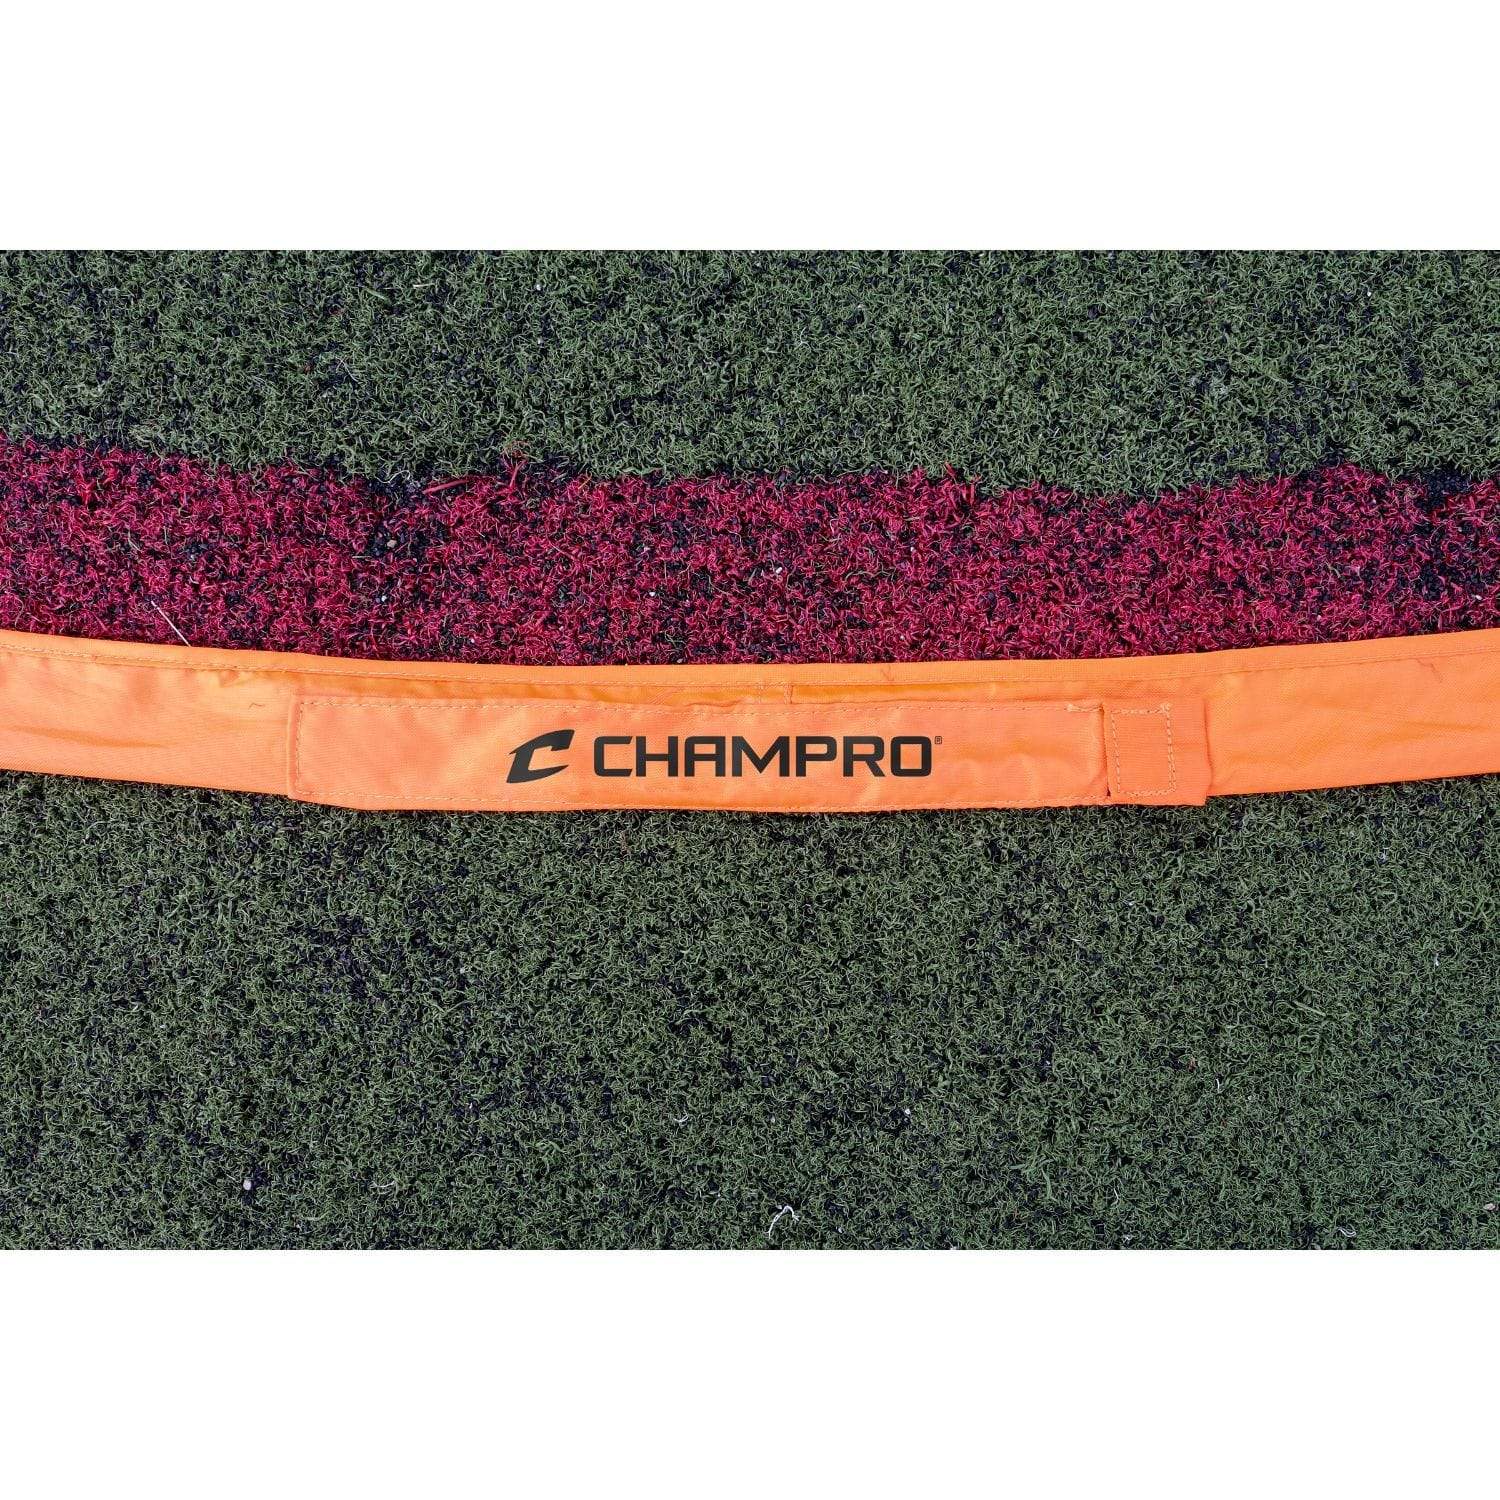 Champro Sports : Lacrosse Champro Mens 18 ft Lacrosse Crease